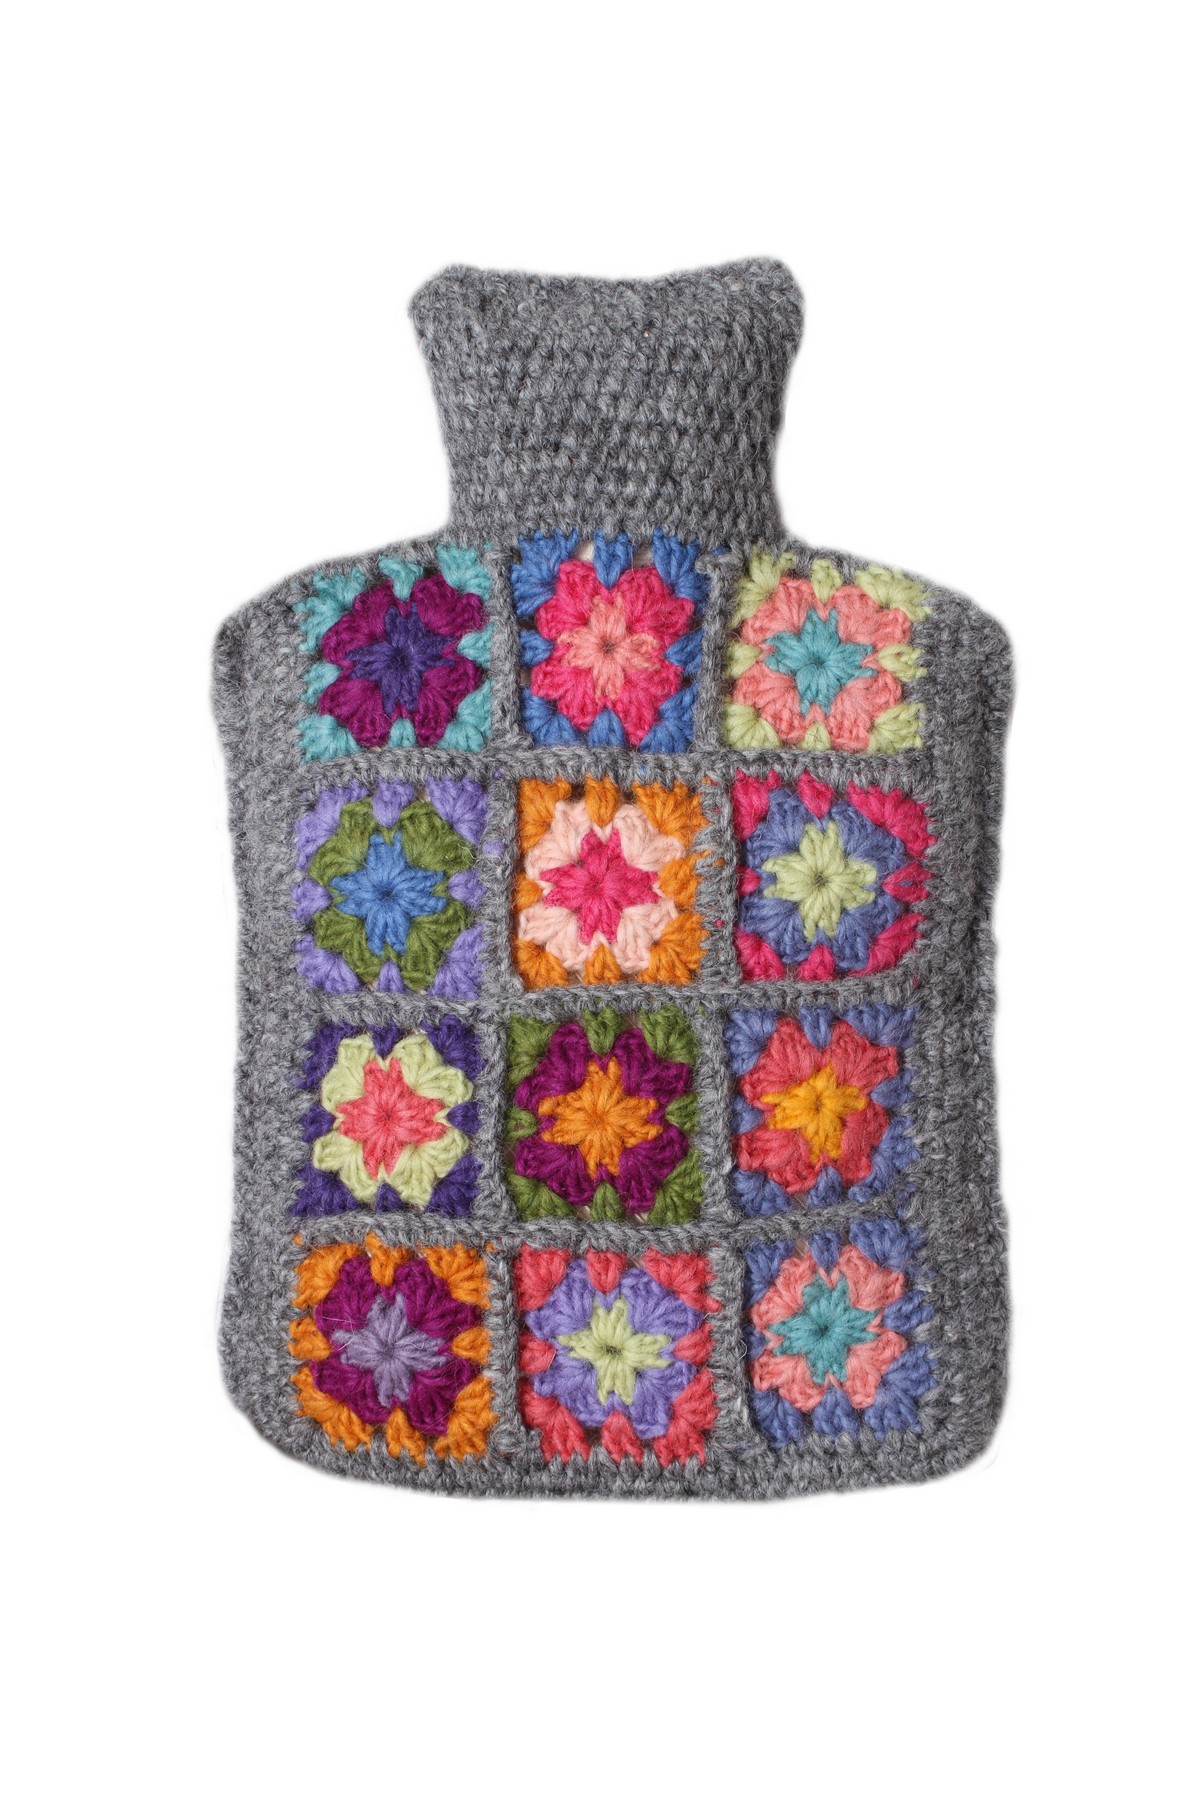 Pachamama "Woodstock" Crochet Hot Water Bottle